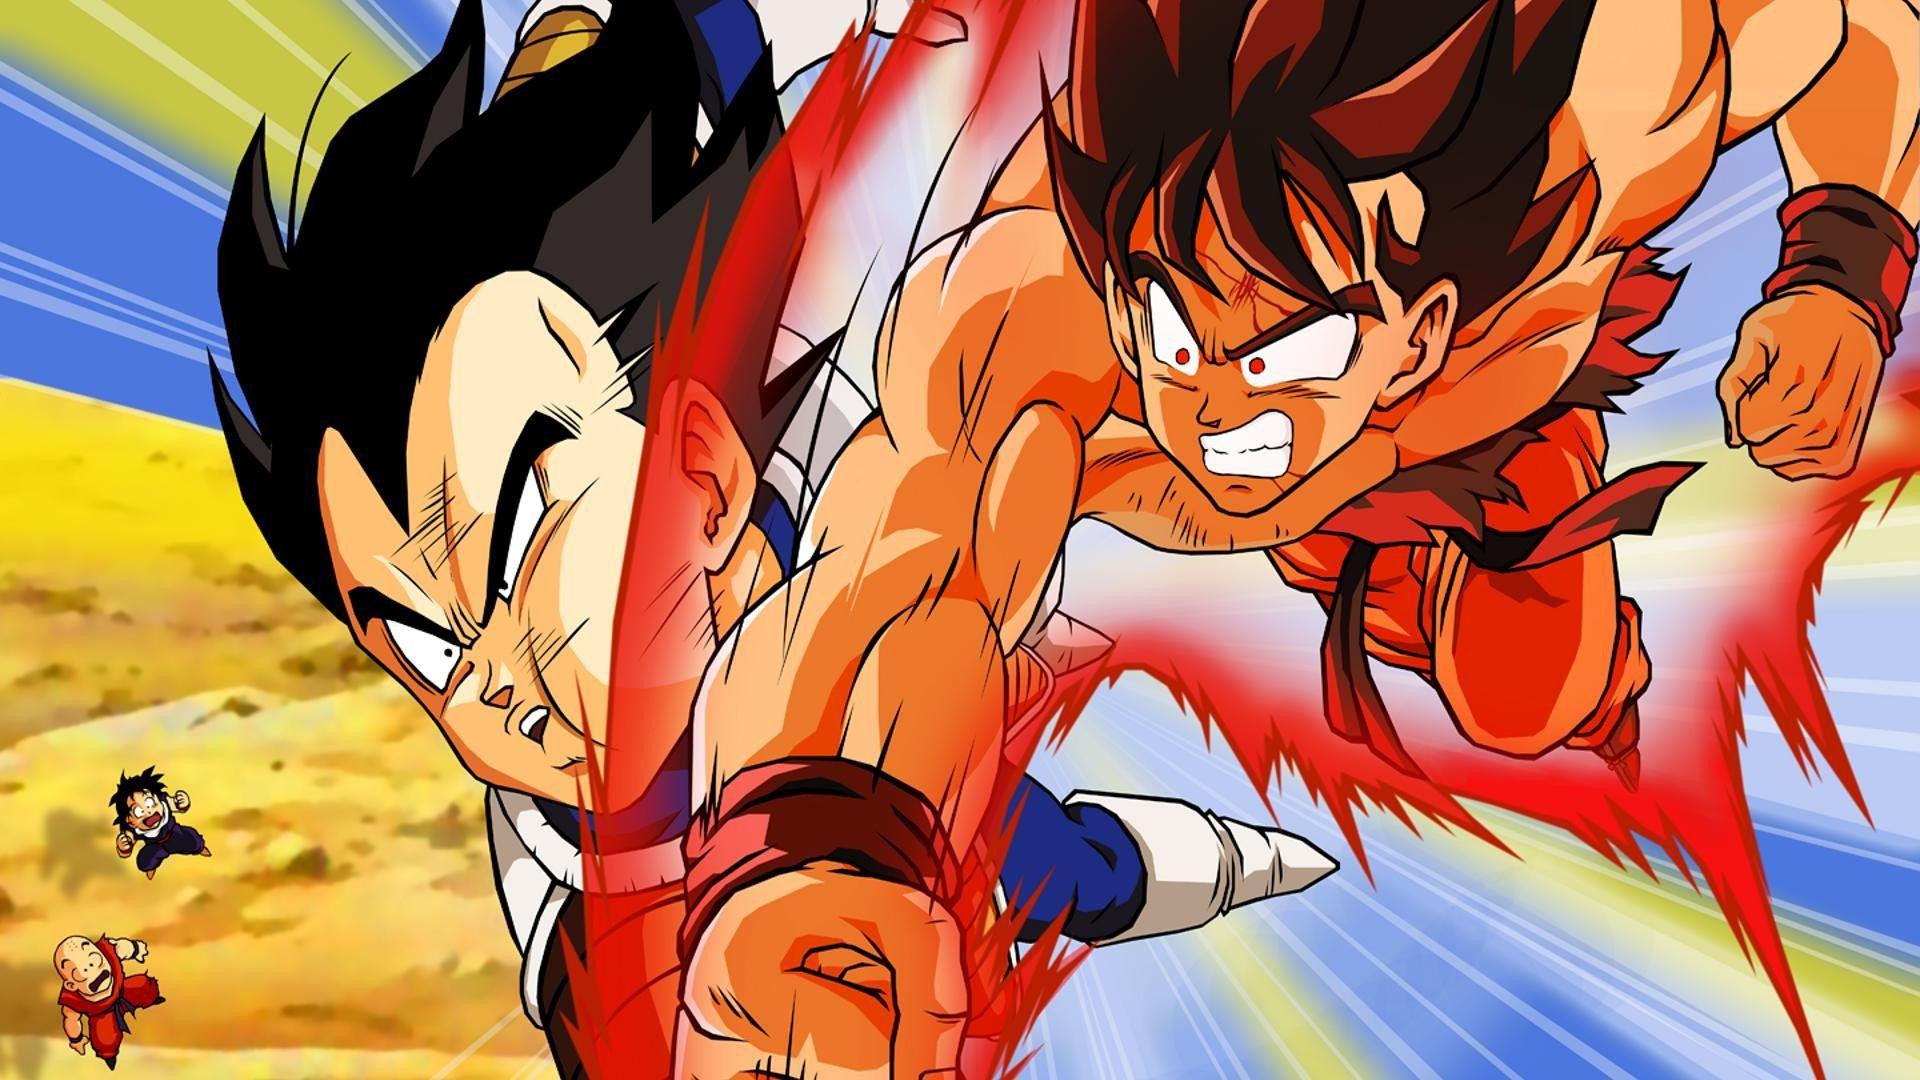 Goku vs Vegeta 4K Wallpaper Free Goku vs Vegeta 4K Background